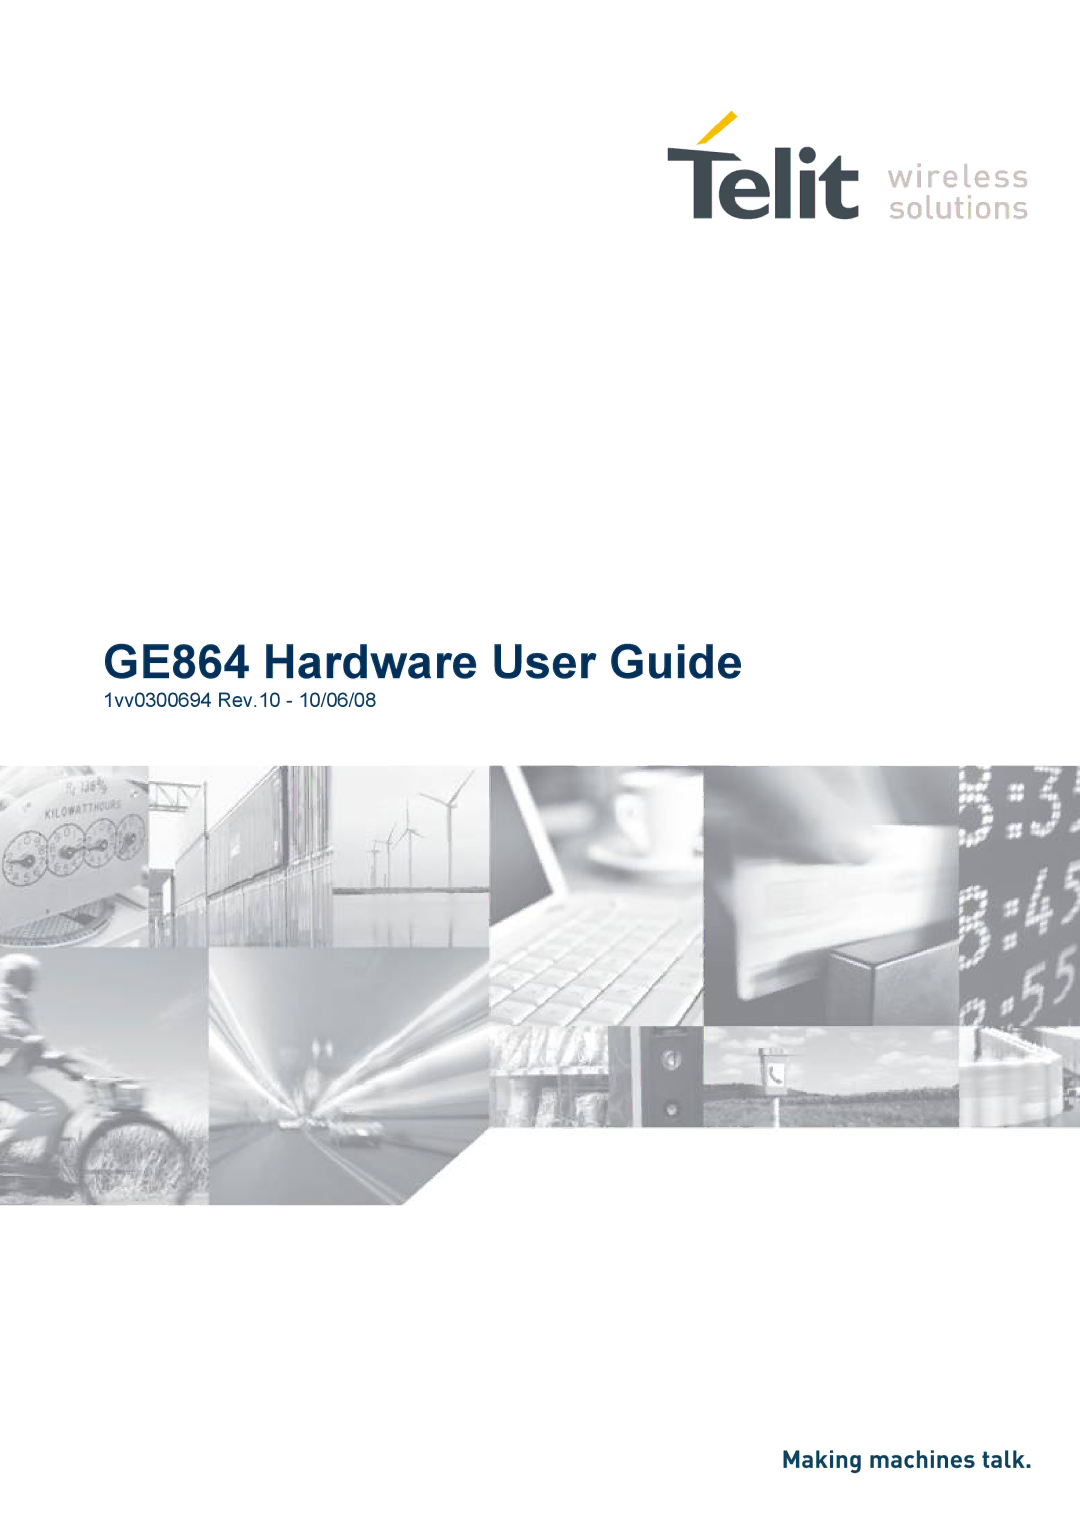 Telit Wireless Solutions manual GE864 Hardware User Guide 